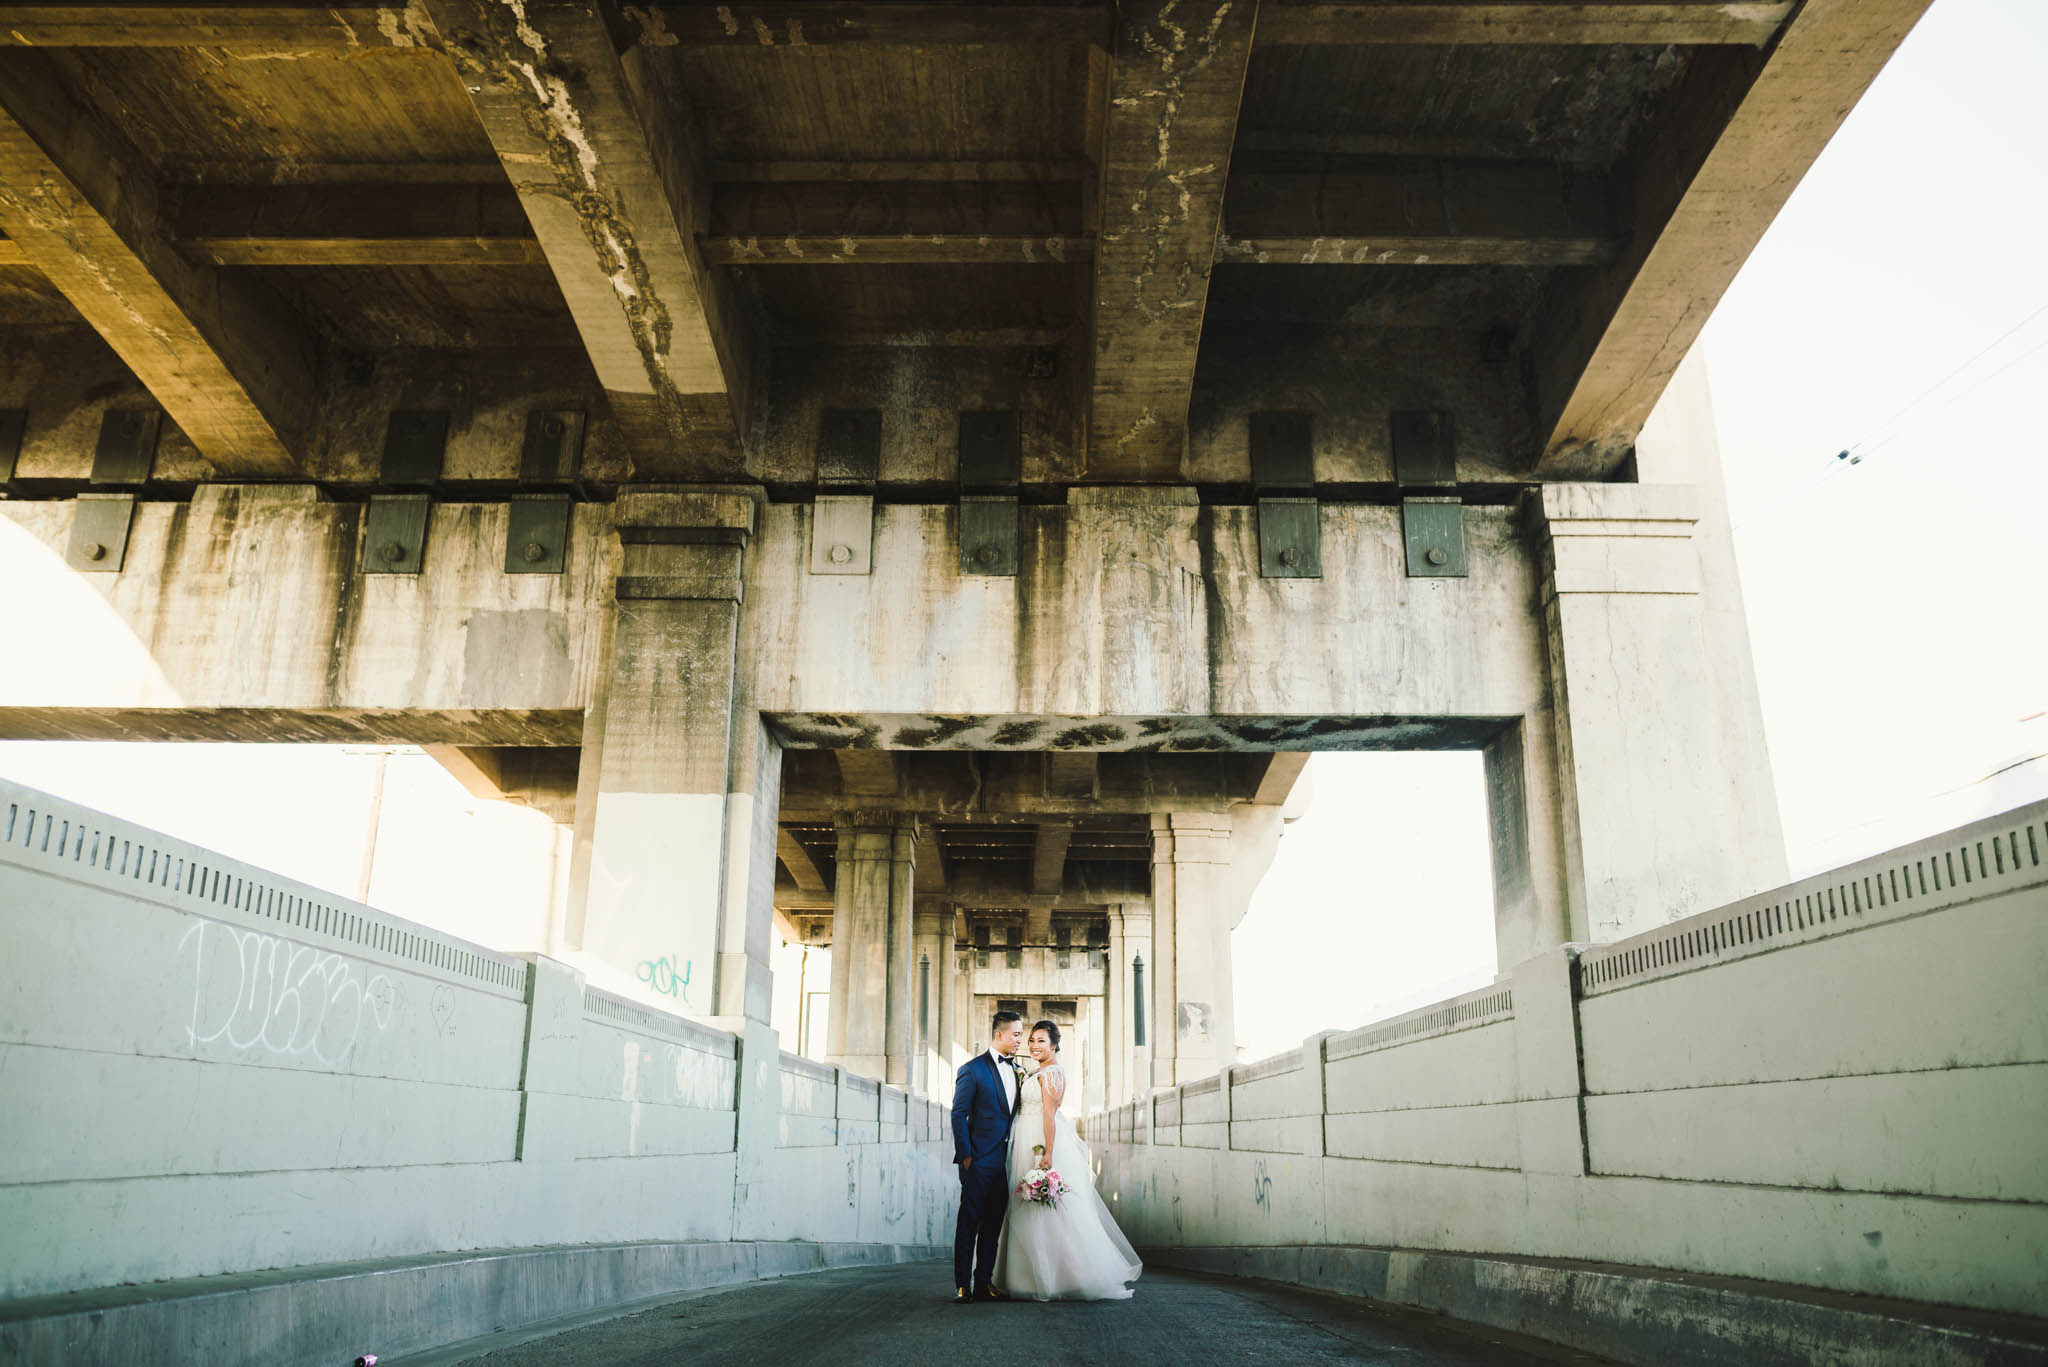 ©Isaiah & Taylor Photography - Los Angeles Wedding Photographer - Lot 613 Warehouse Space-49.jpg